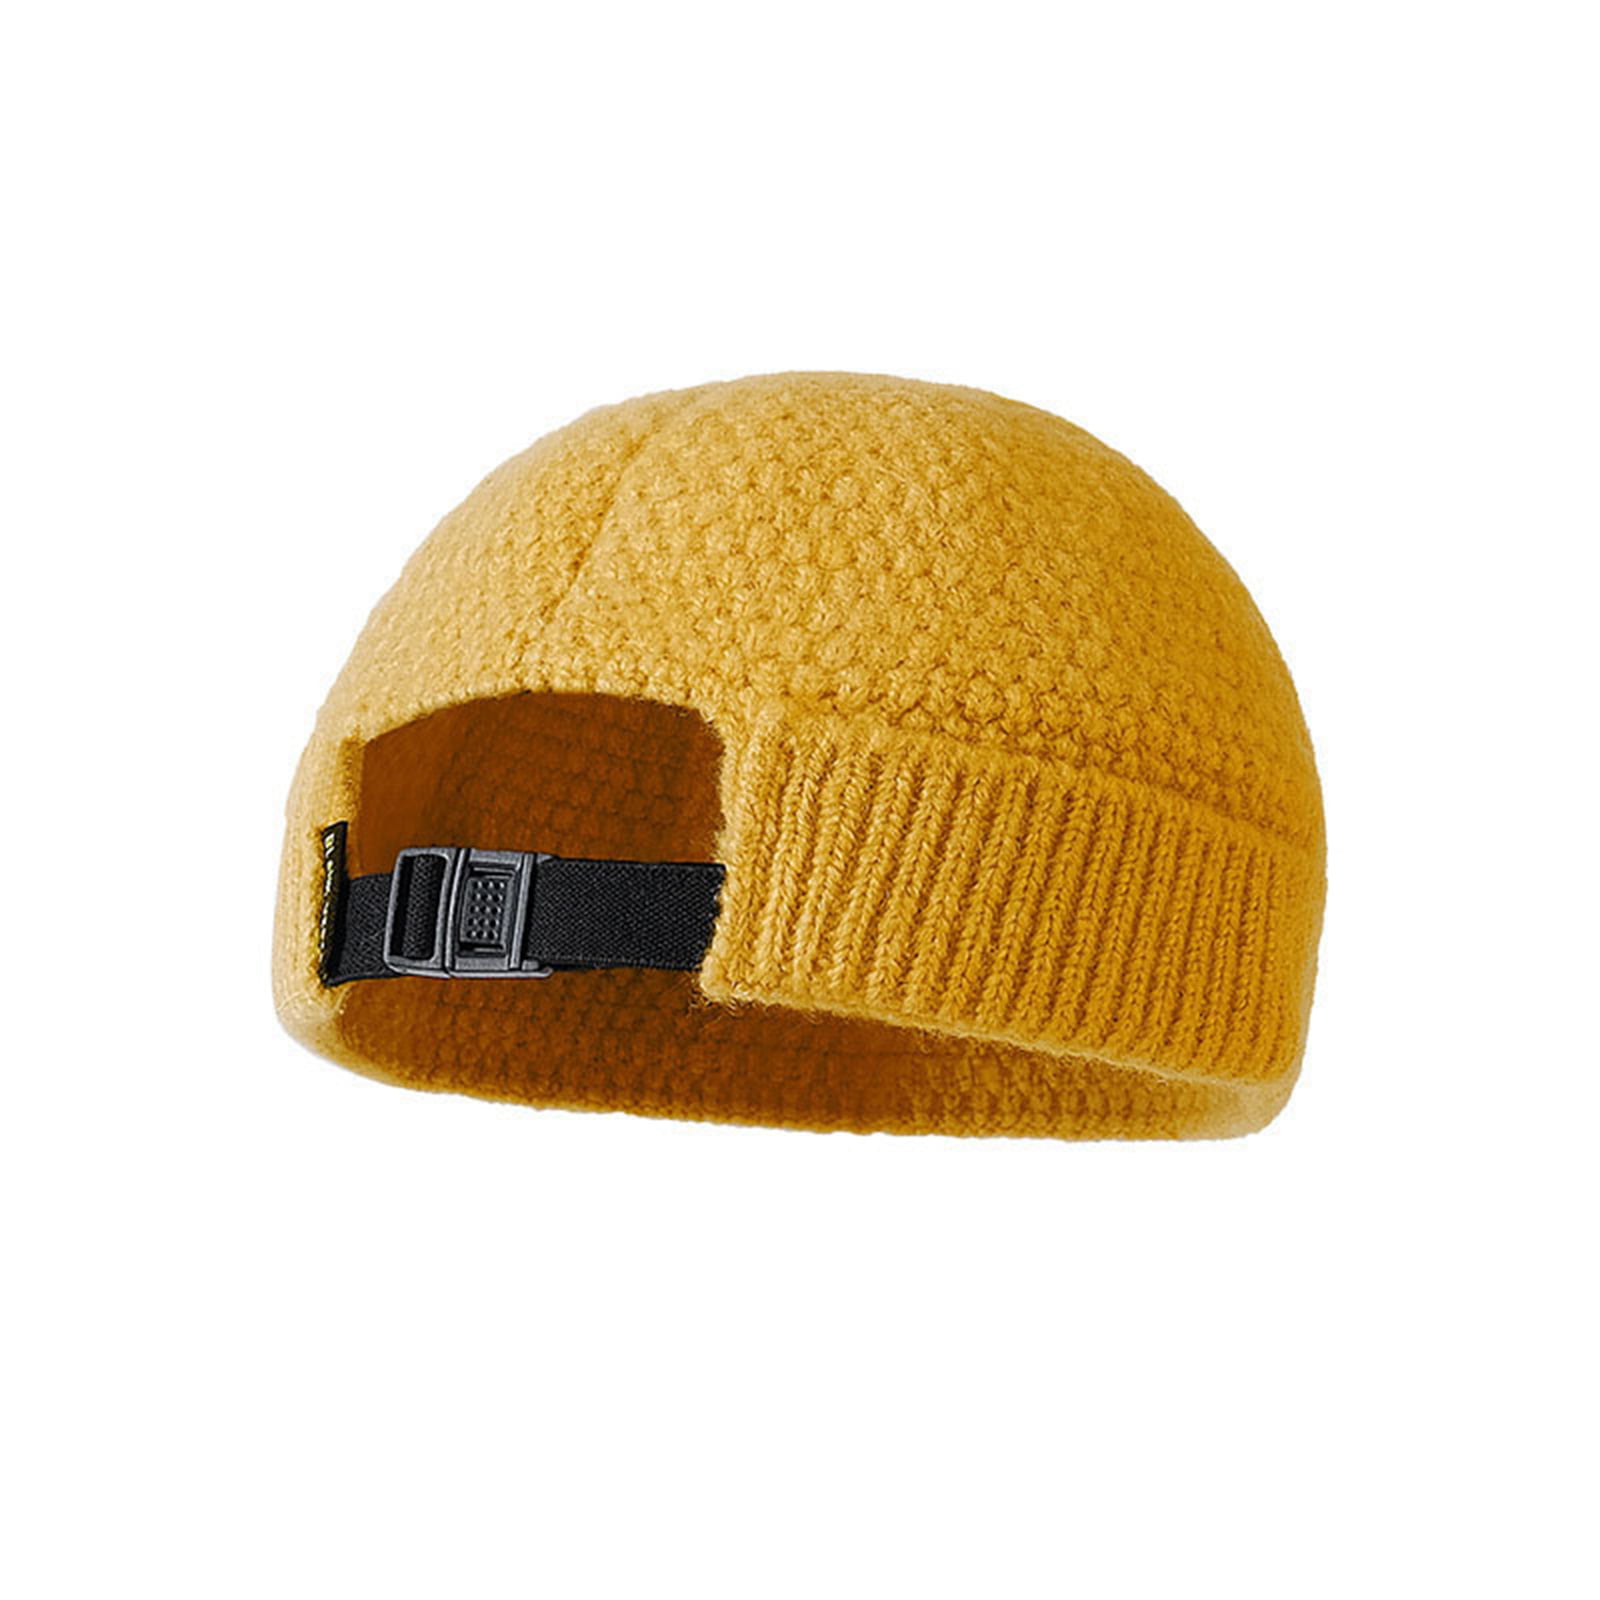 Arctic-Fox Warm Knit Winter Solid Beanie Hat Unisex Skull Cap 